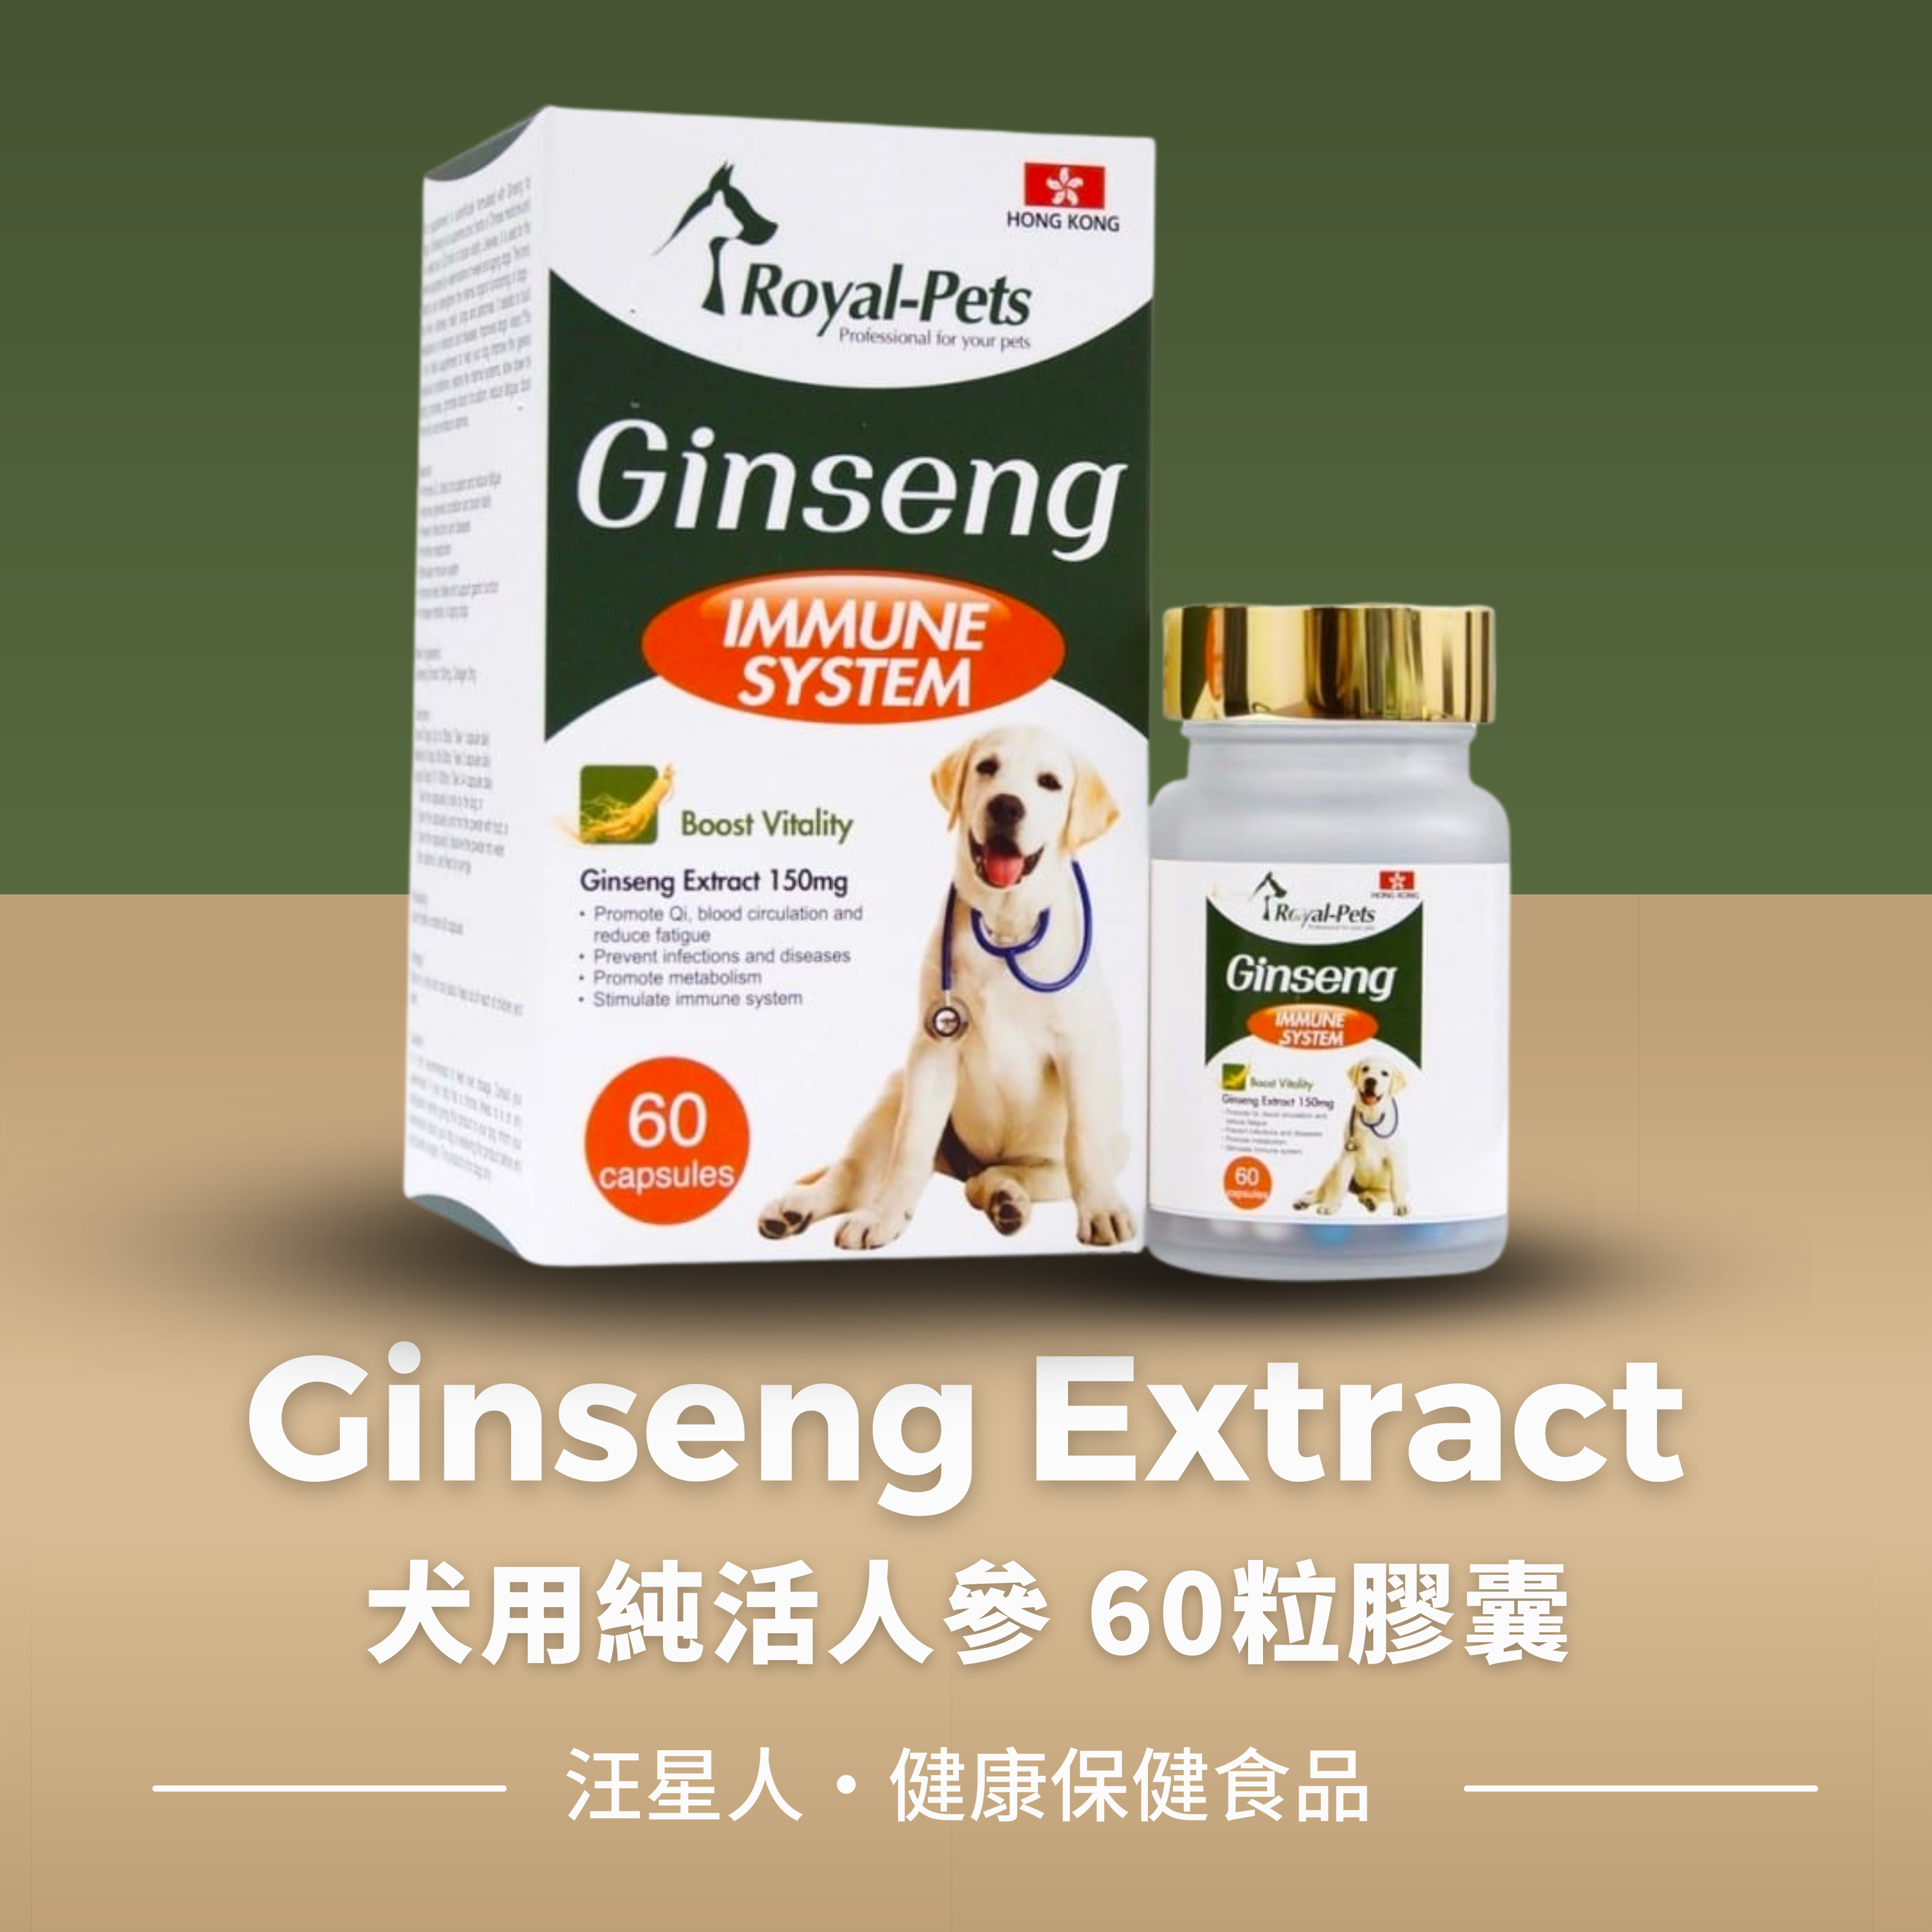 Ginseng Extract (60 capsules) 犬用純活人參 60粒膠囊